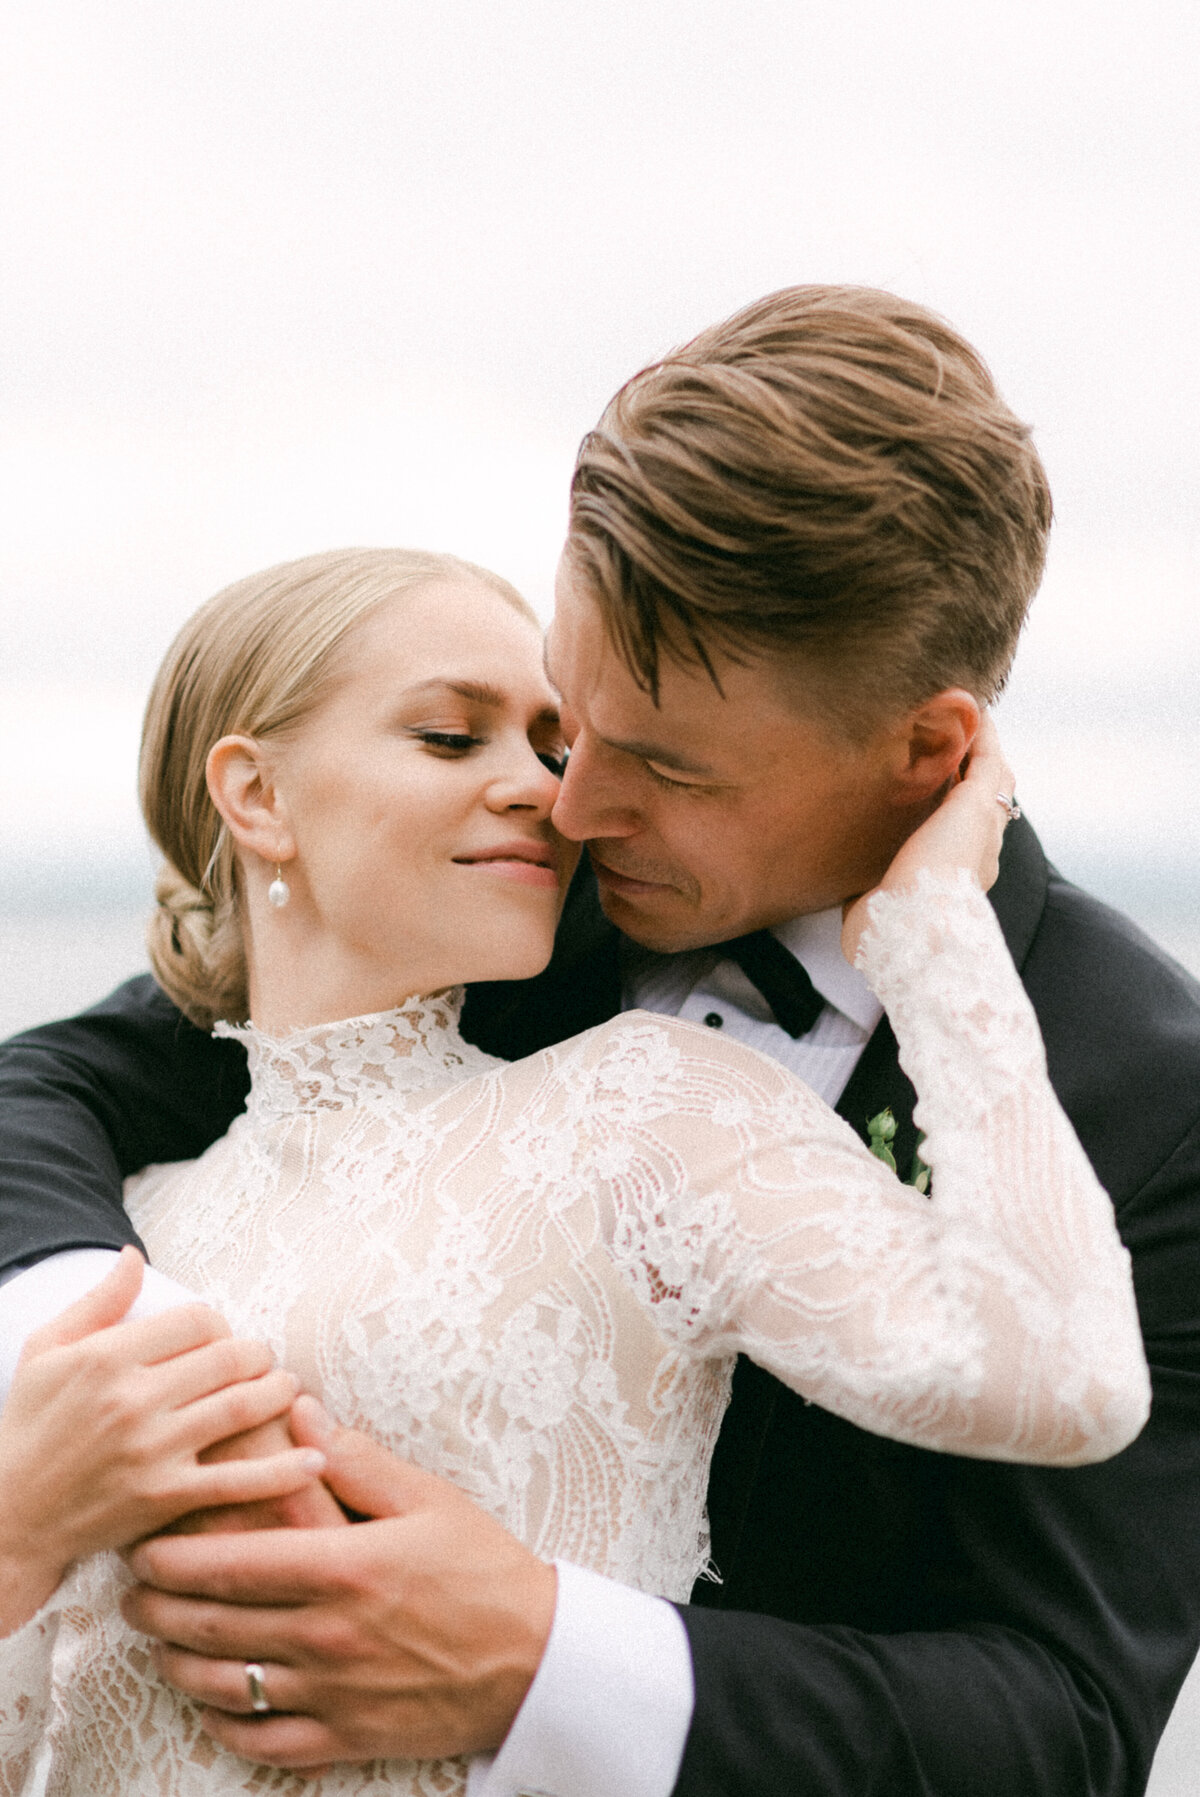 A wedding photograph by photographer Hannika Gabrielsson.